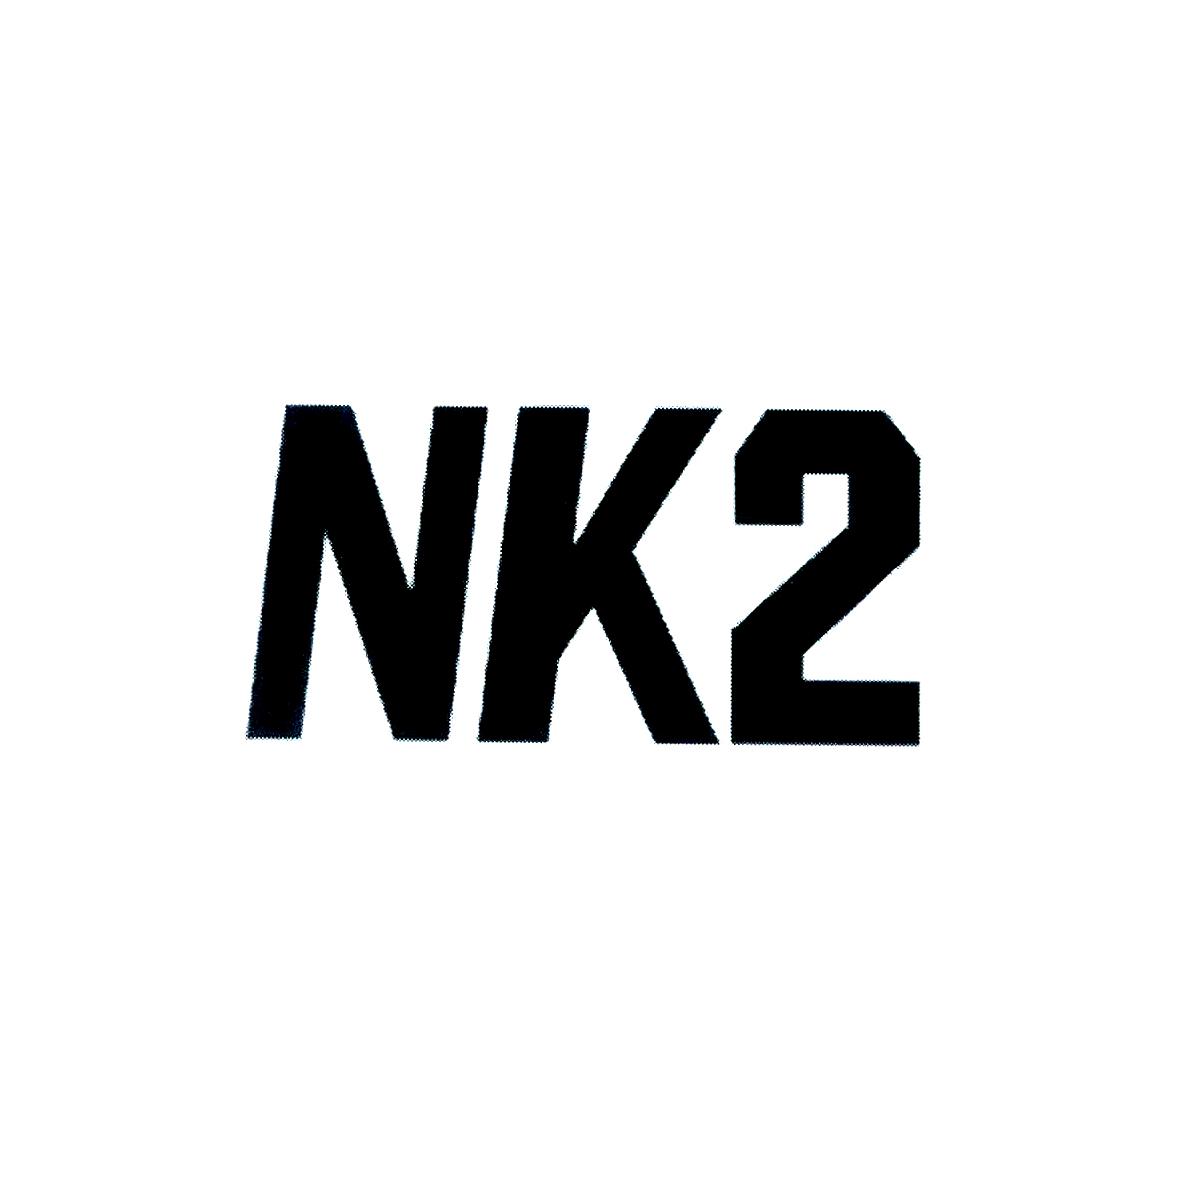 NK2